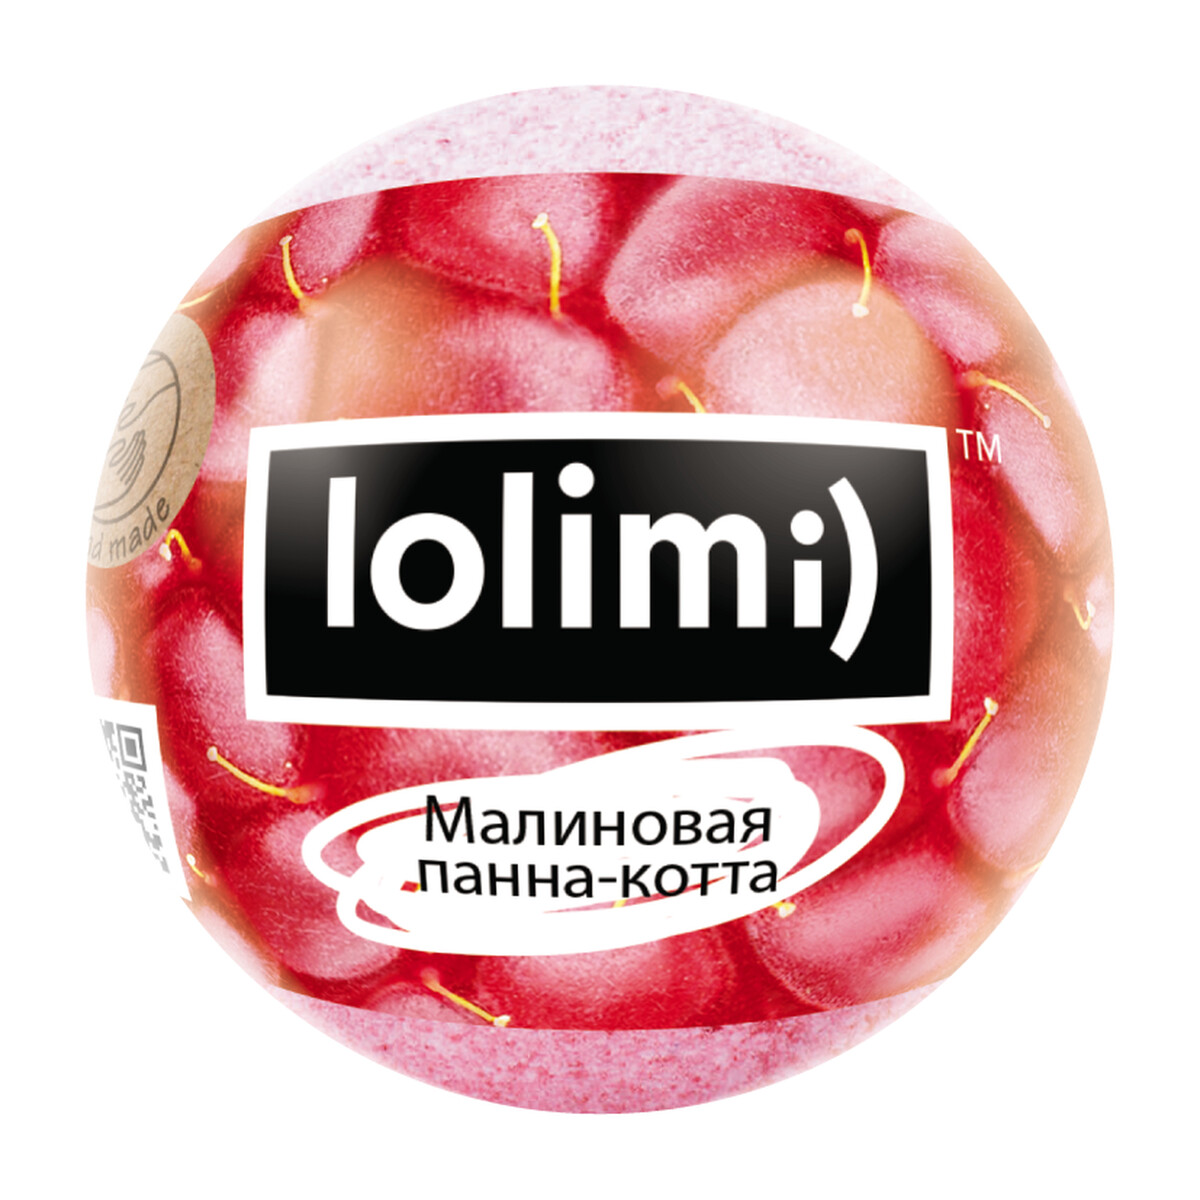    lolimi) 